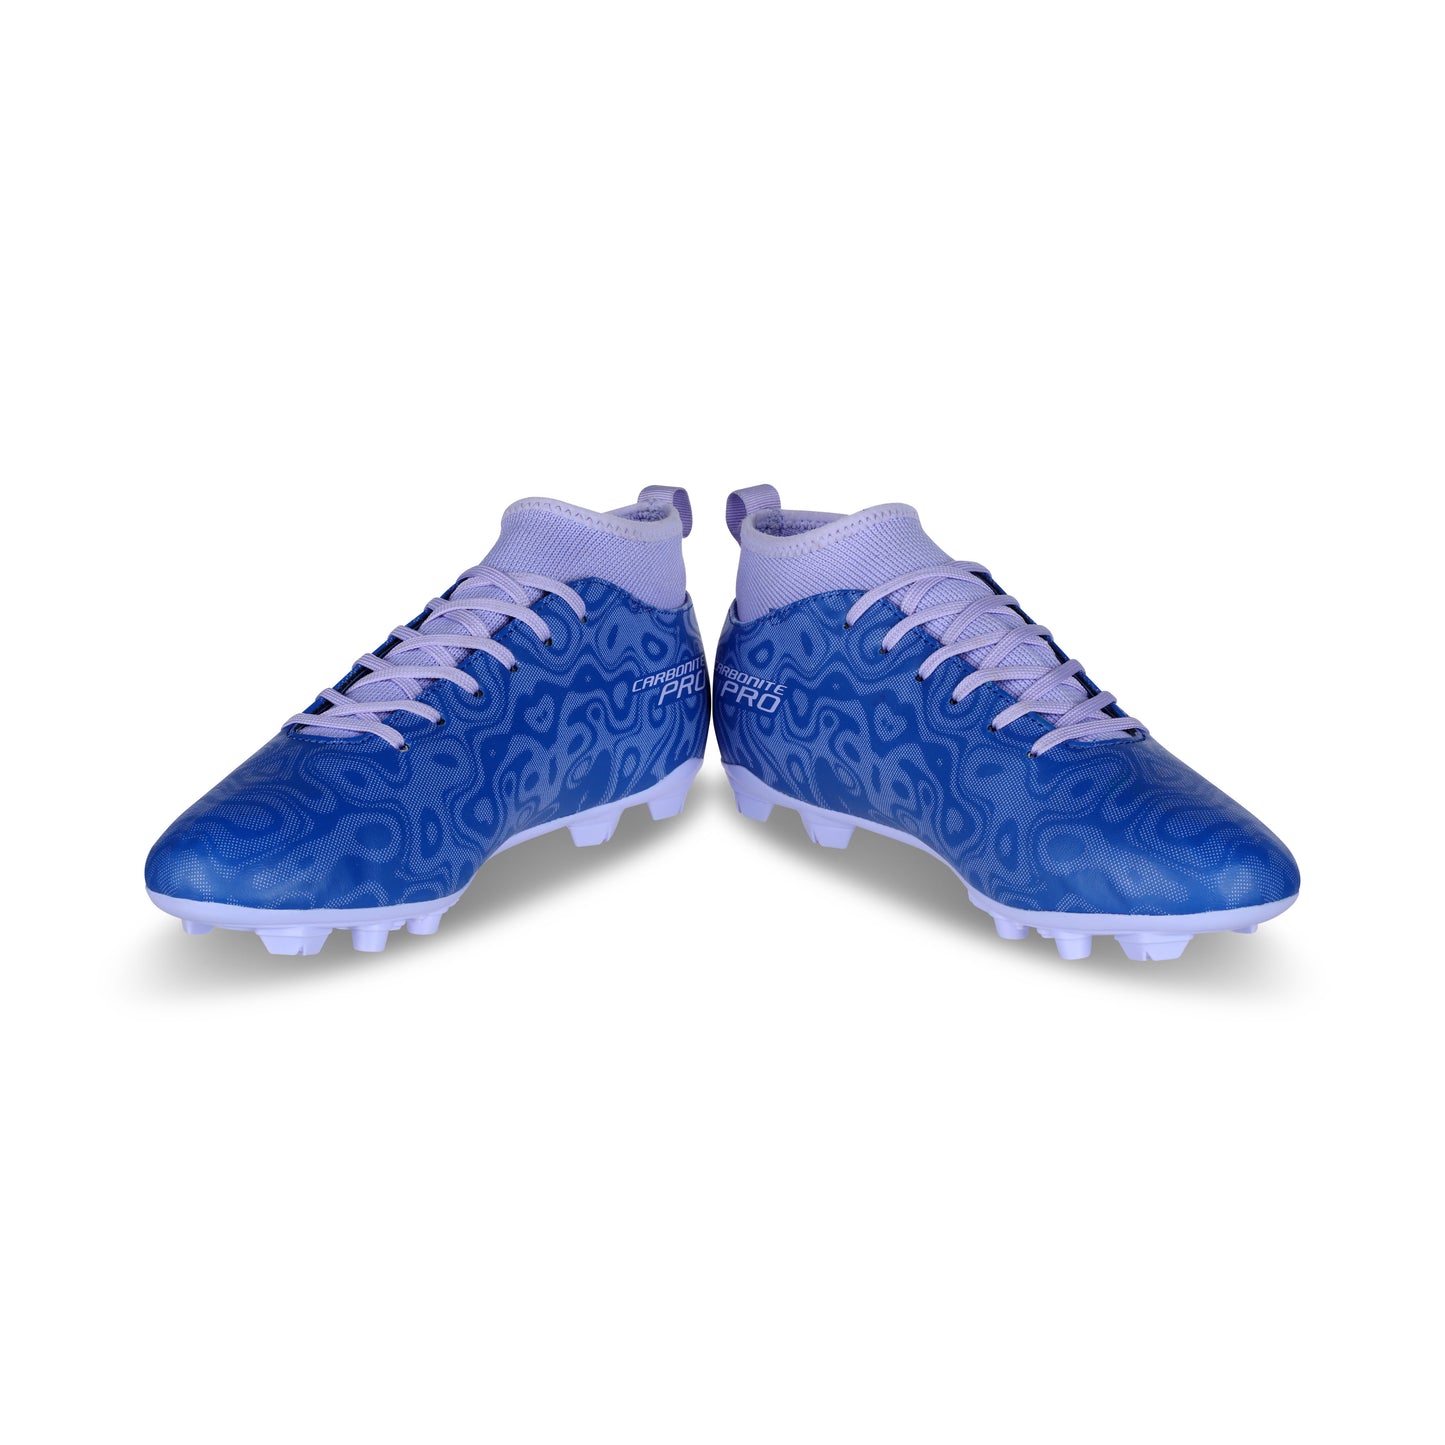 Nivia Carbonite Pro 5.0 Football Shoes - Best Price online Prokicksports.com